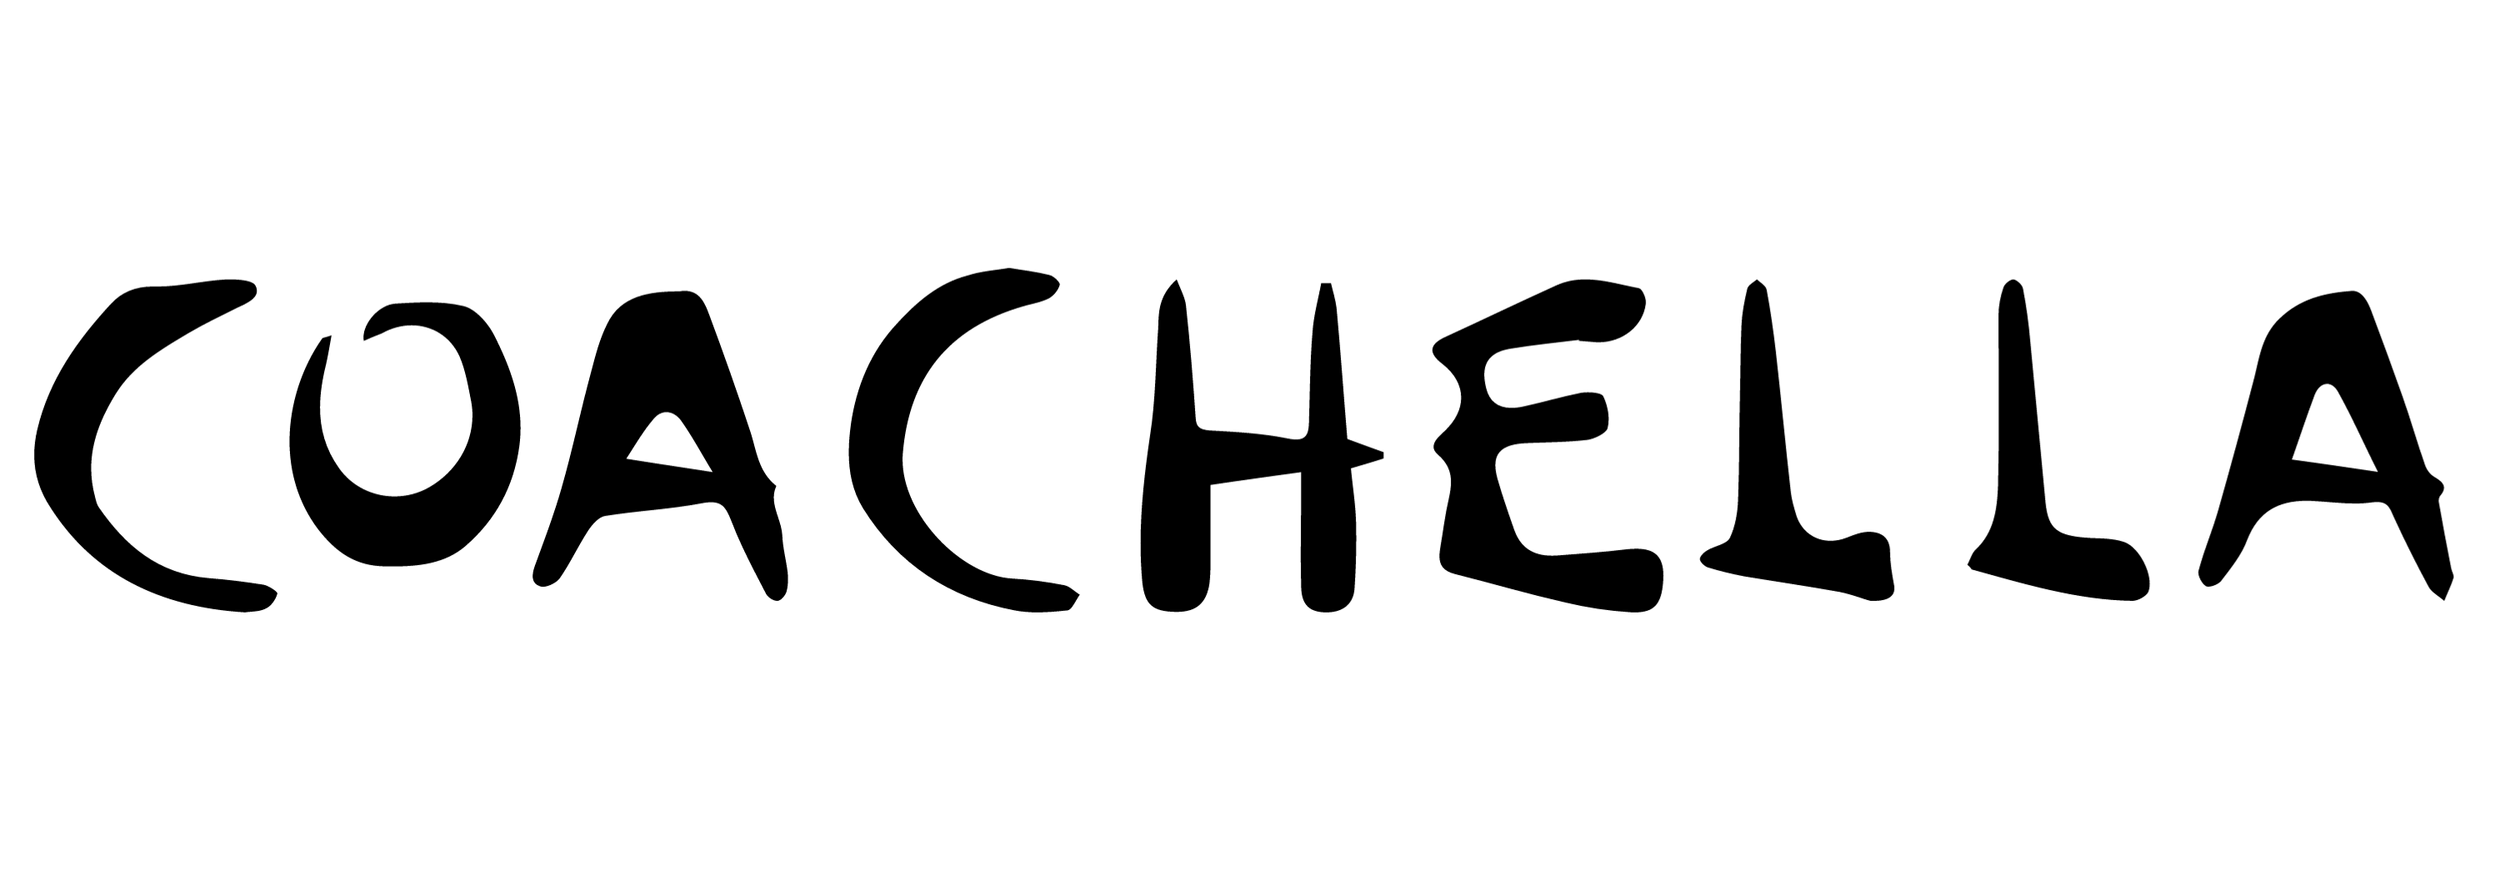 Coachella Logo.png